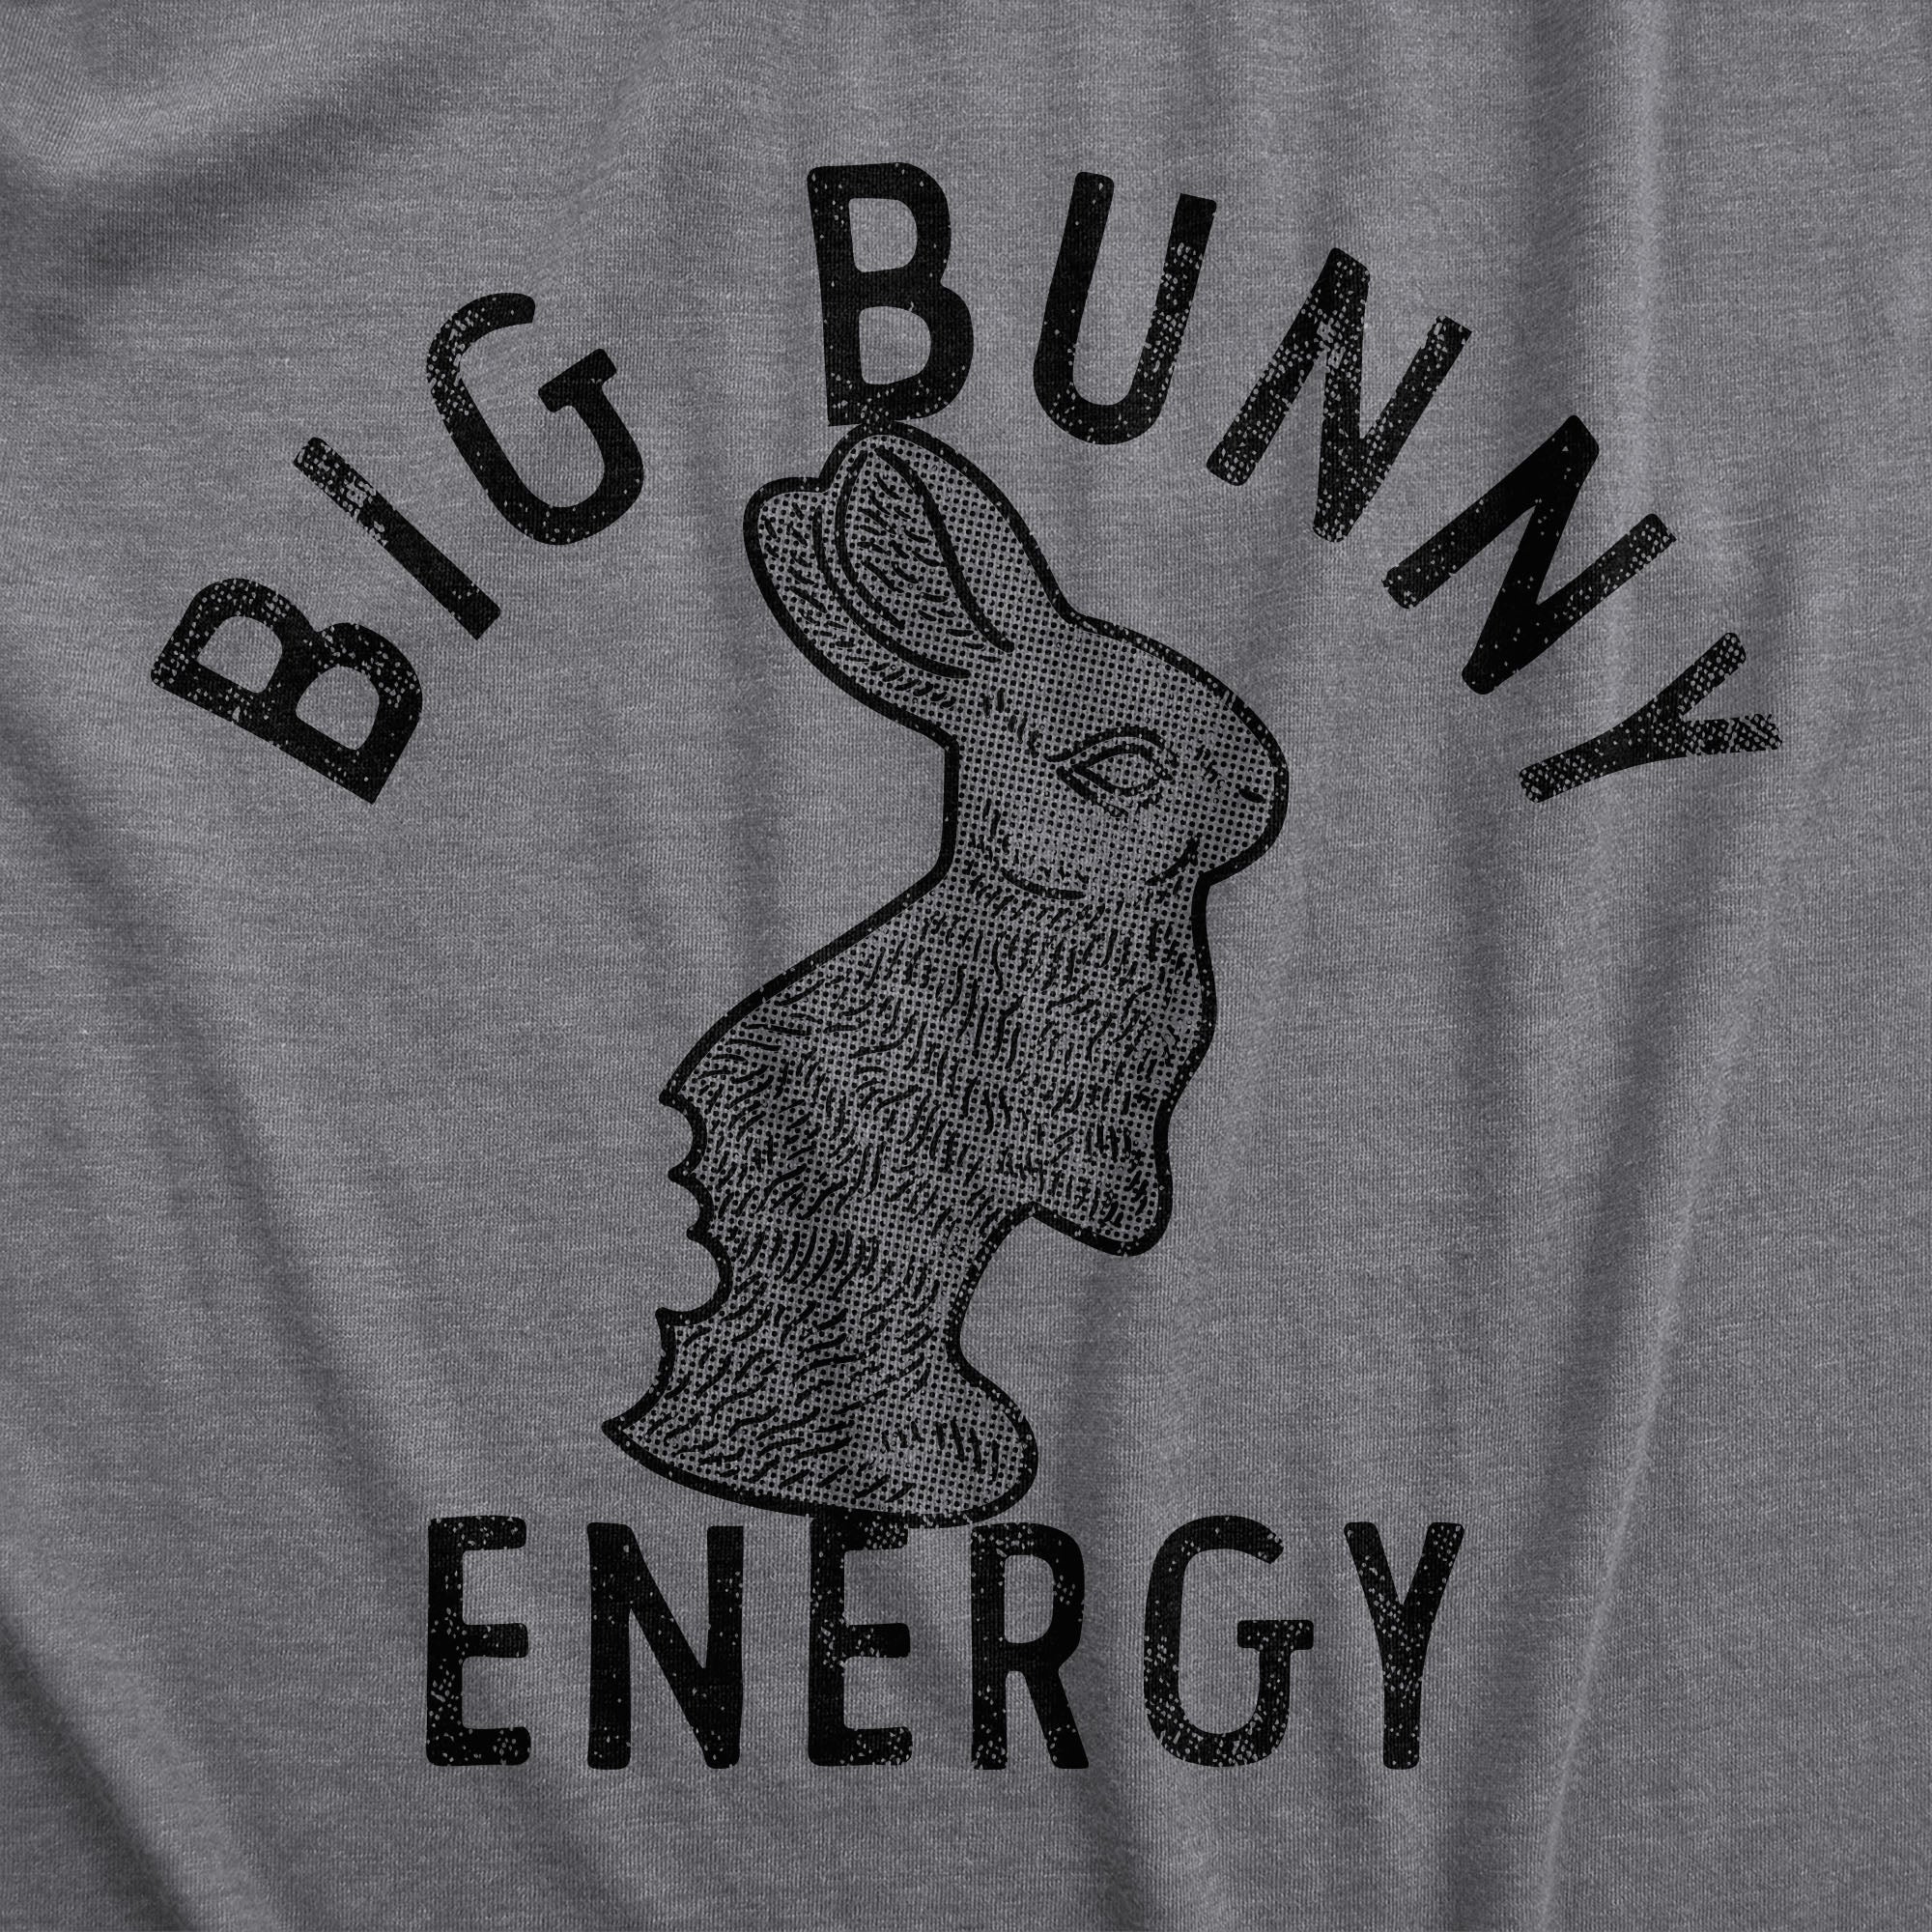 Funny Dark Heather Grey - Big Bunny Energy Big Bunny Energy Womens T Shirt Nerdy Easter Tee